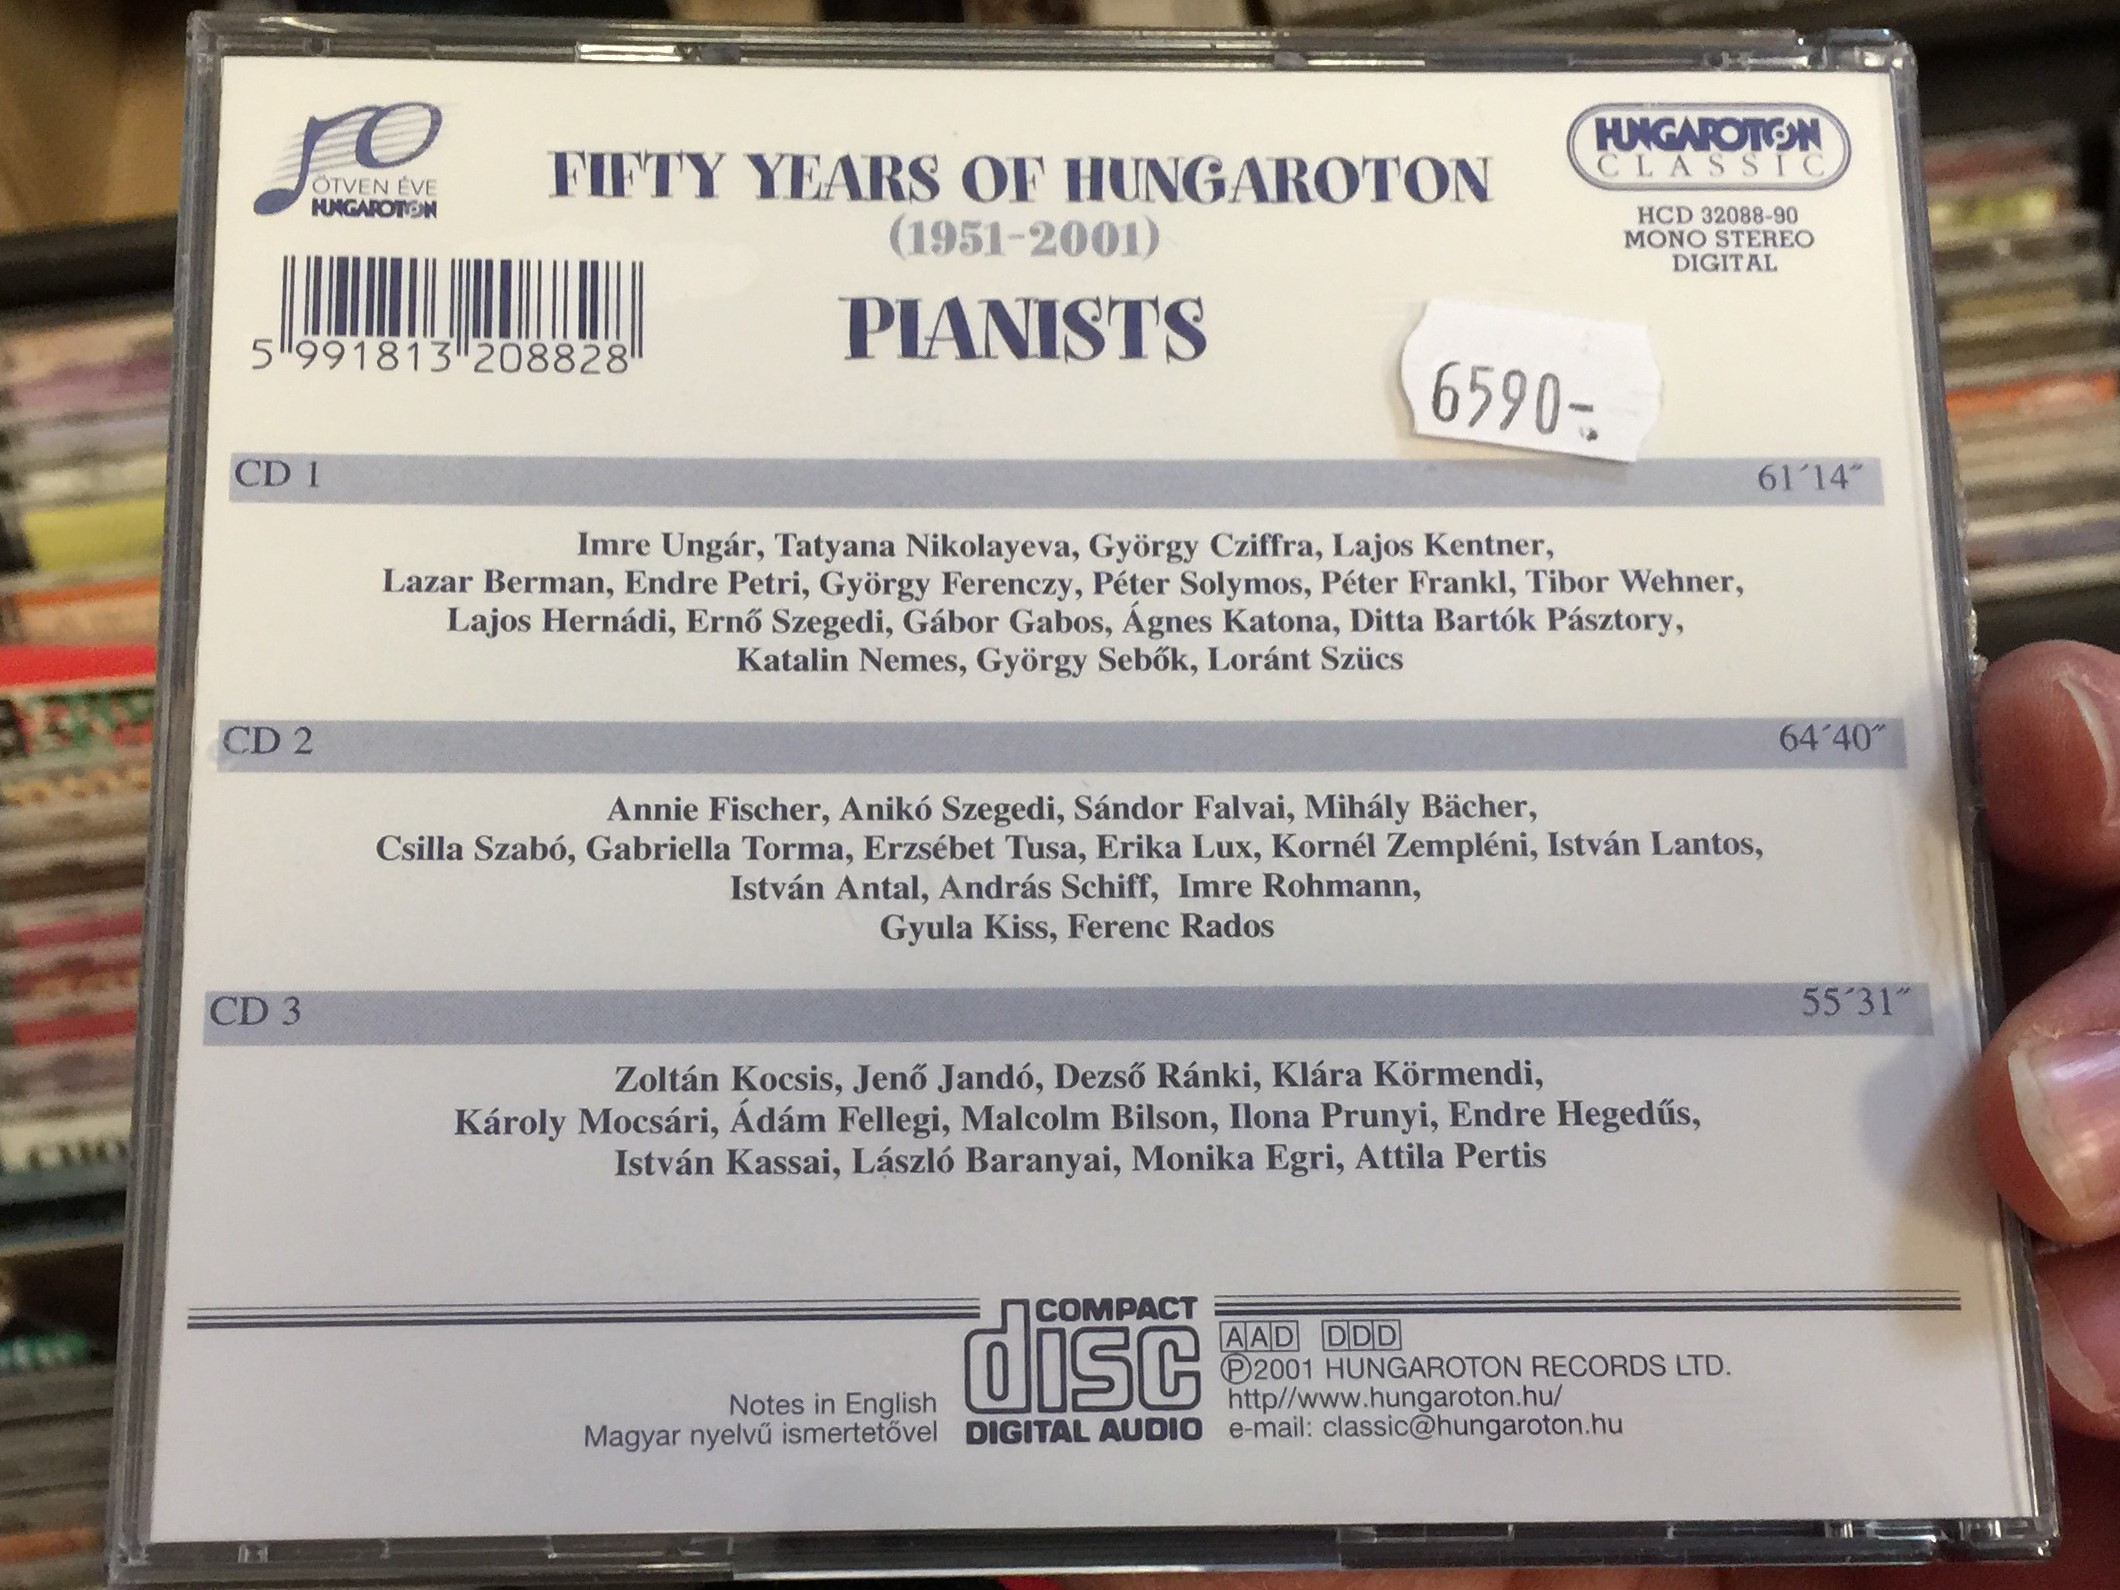 fifty-years-of-hungaroton-1951-2001-pianists-hungaroton-classic-3x-audio-cd-2001-mono-stereo-hcd-32088-90-2-.jpg